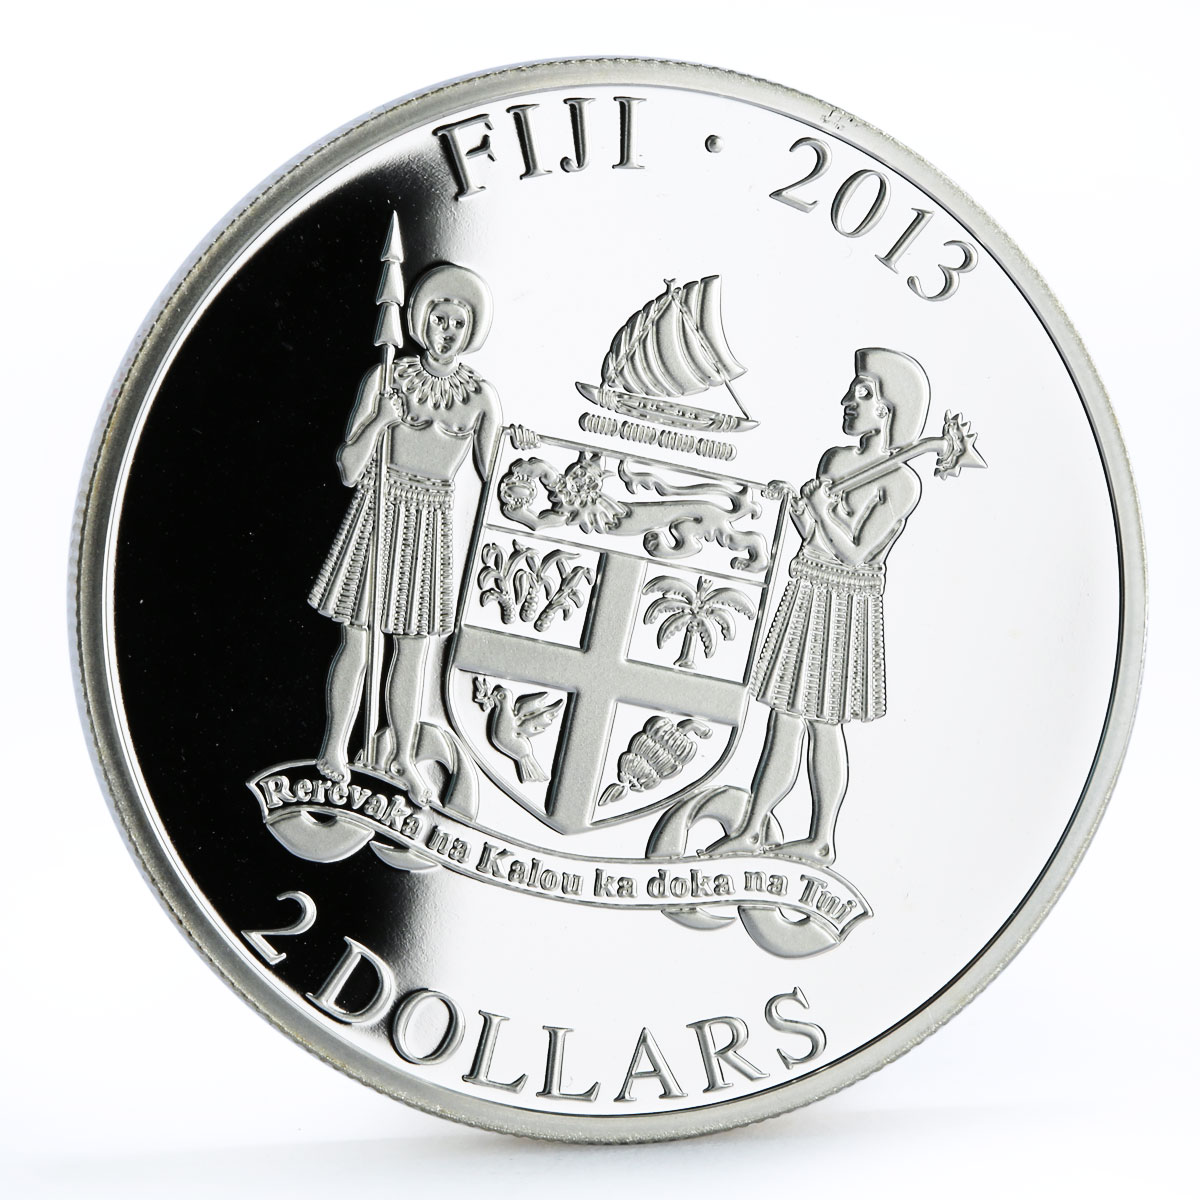 Fiji 2 dollars My Best Friend English Cocker Spaniel Dog silver coin 2013